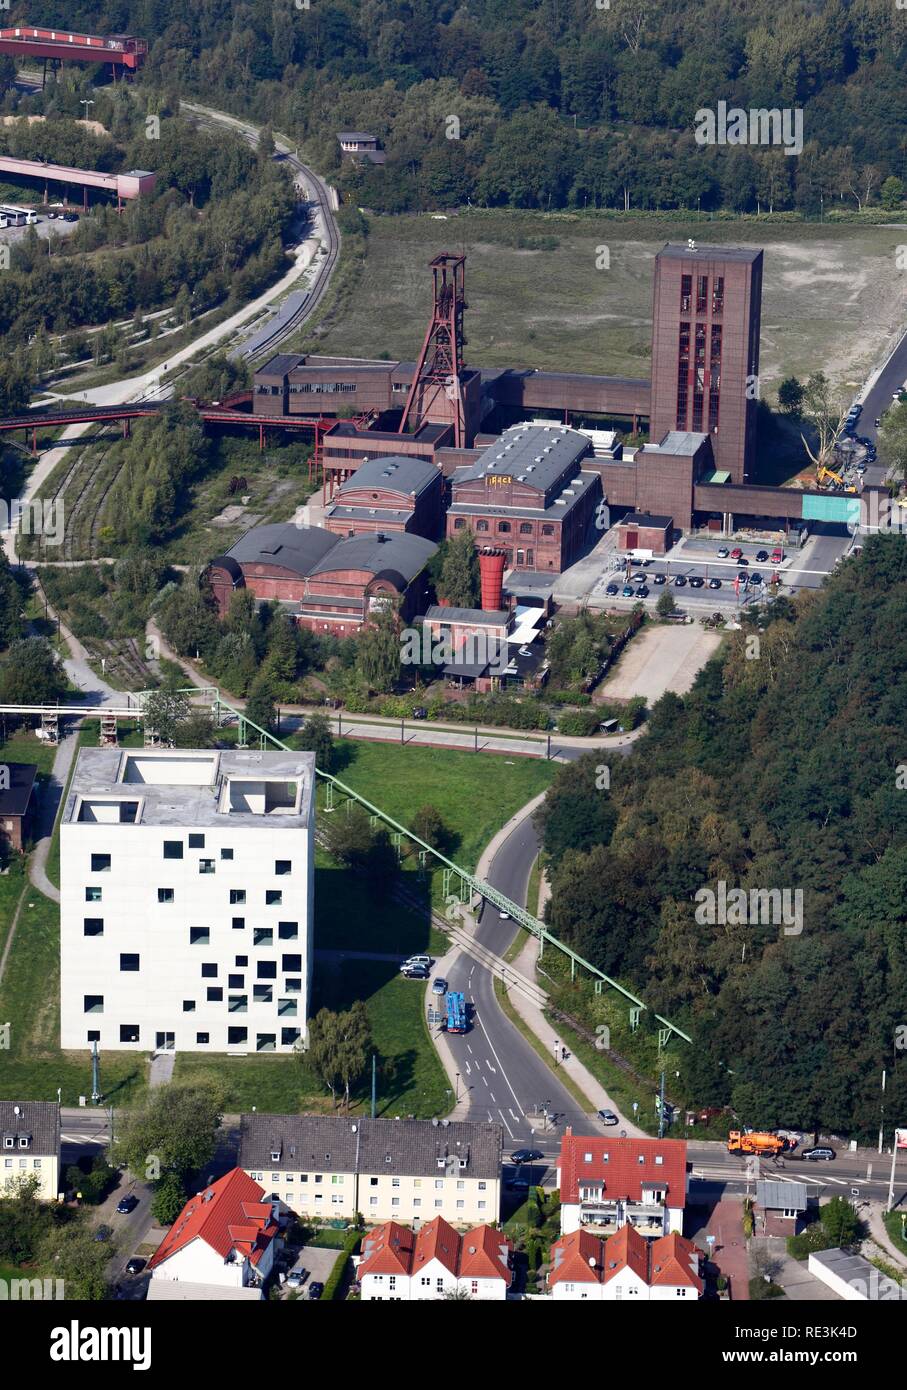 Zeche Zollverein mine, UNESCO World Heritage Site, area Schacht 1, 2, 8 mines, dance center NRW PACT, Kunstschacht art shaft Stock Photo